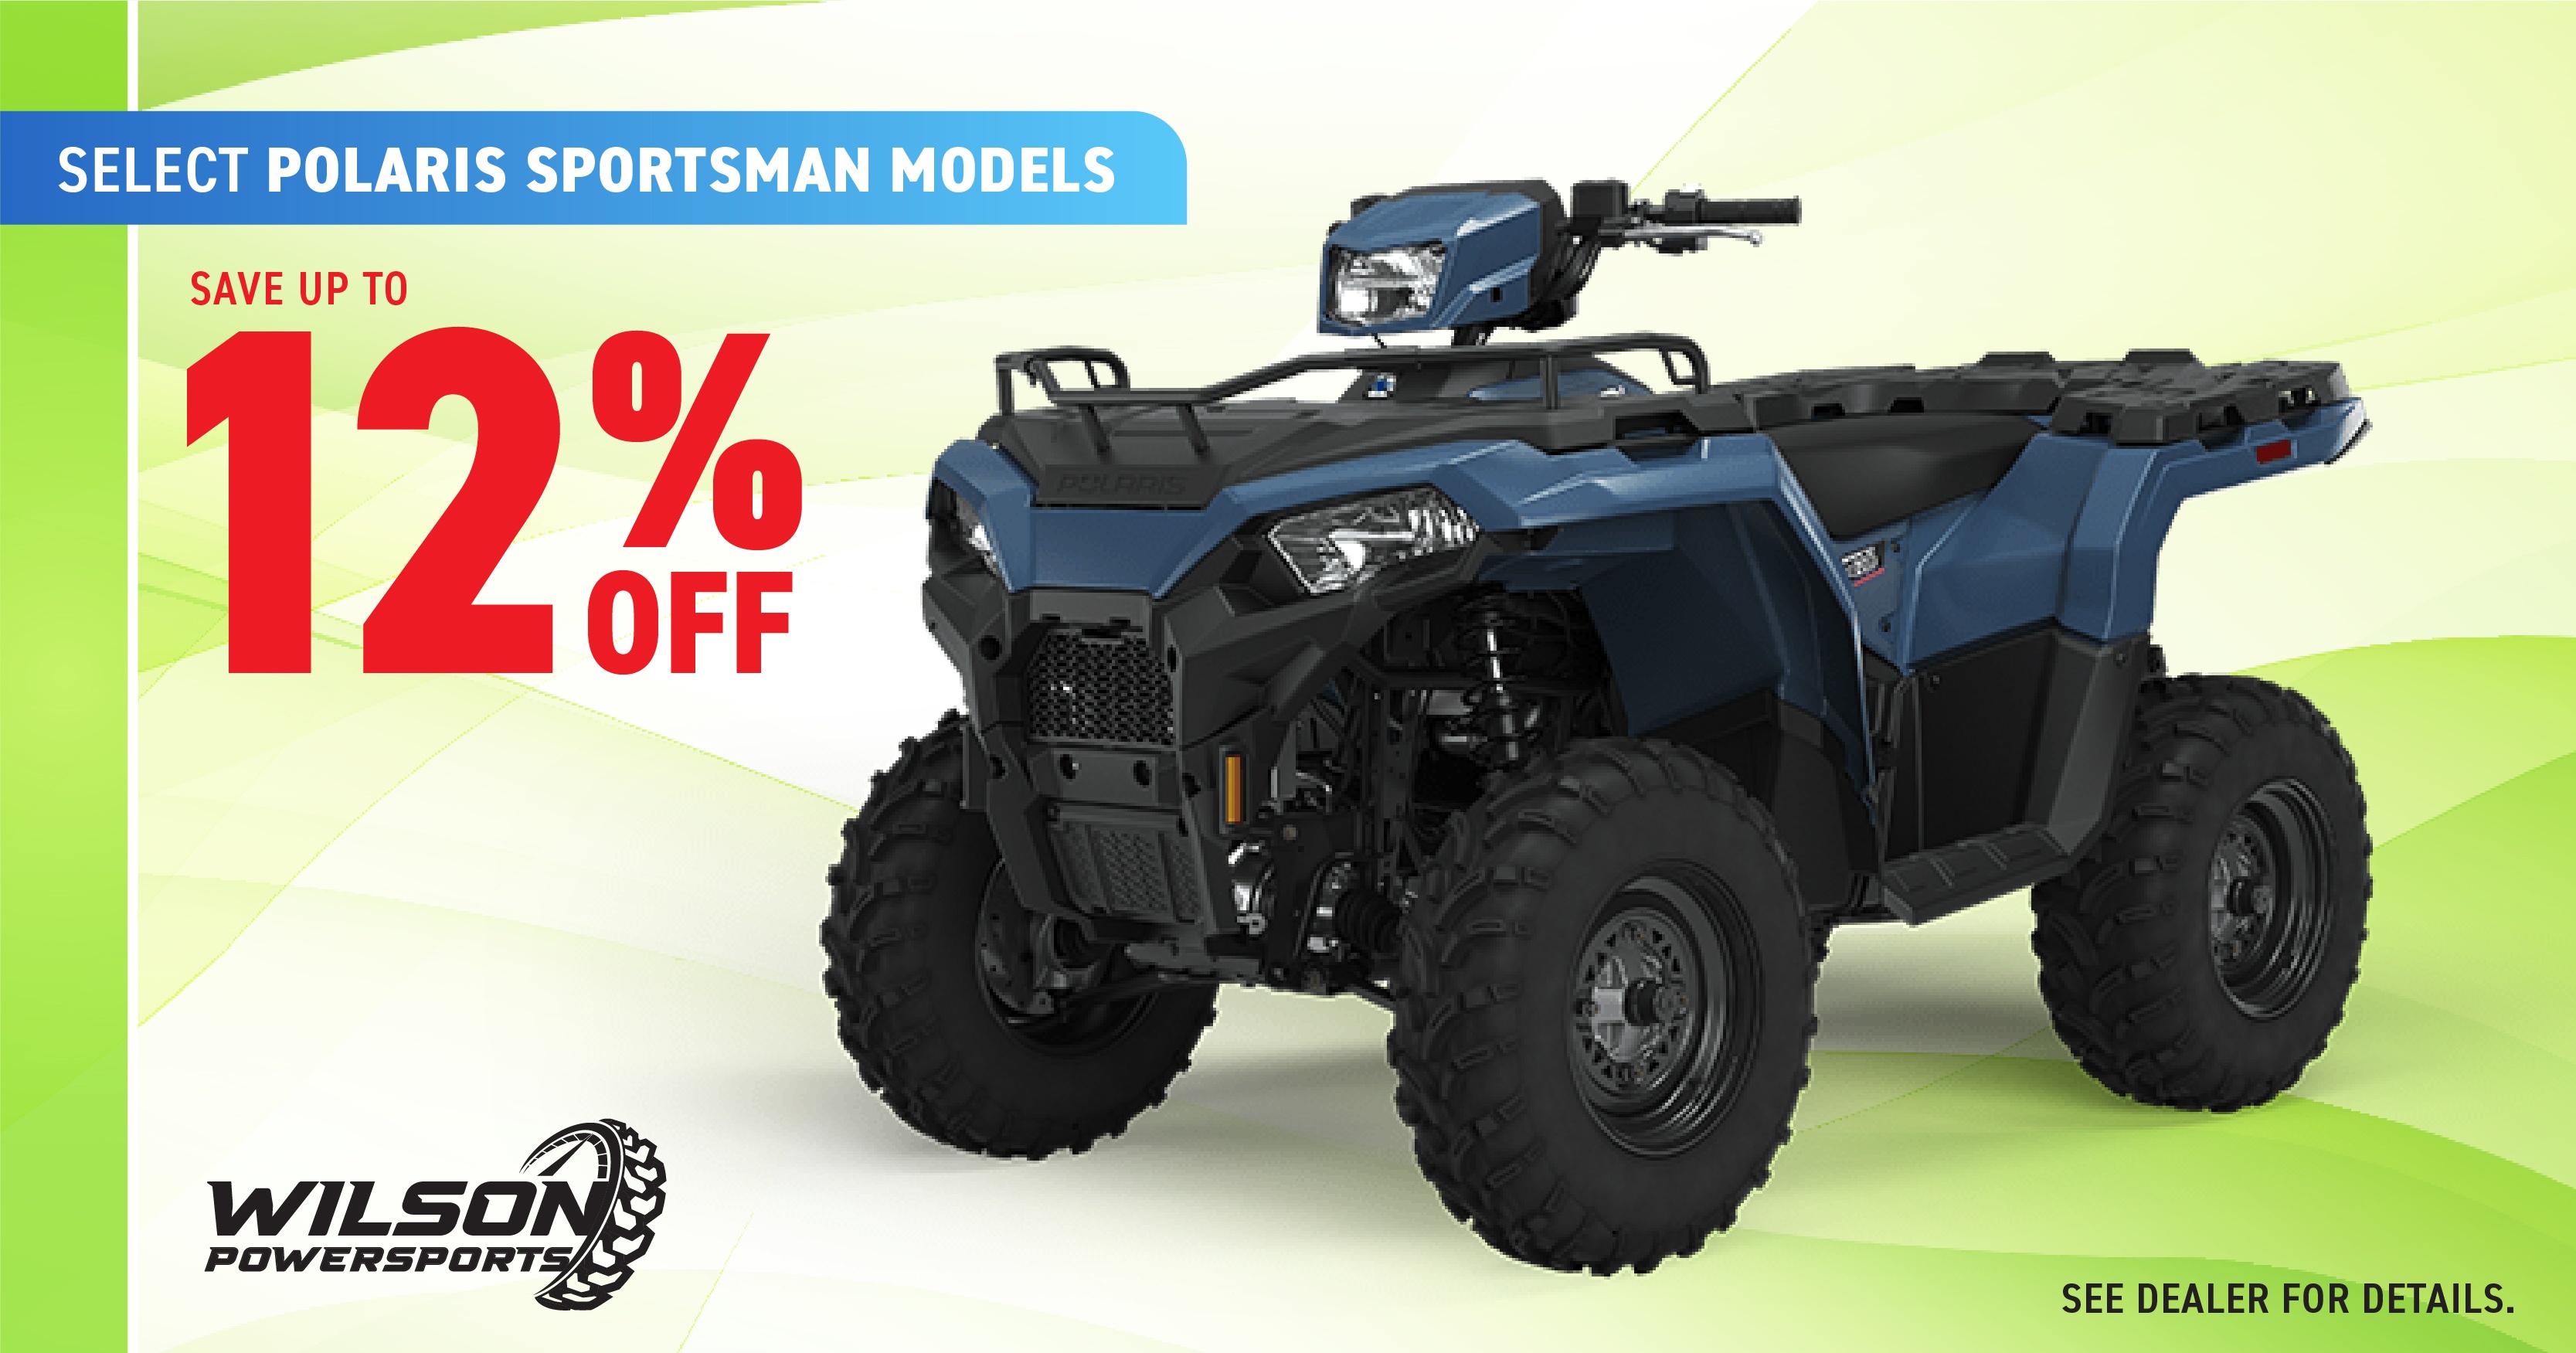 Up to 12% off select Polaris Sportsman ATVs